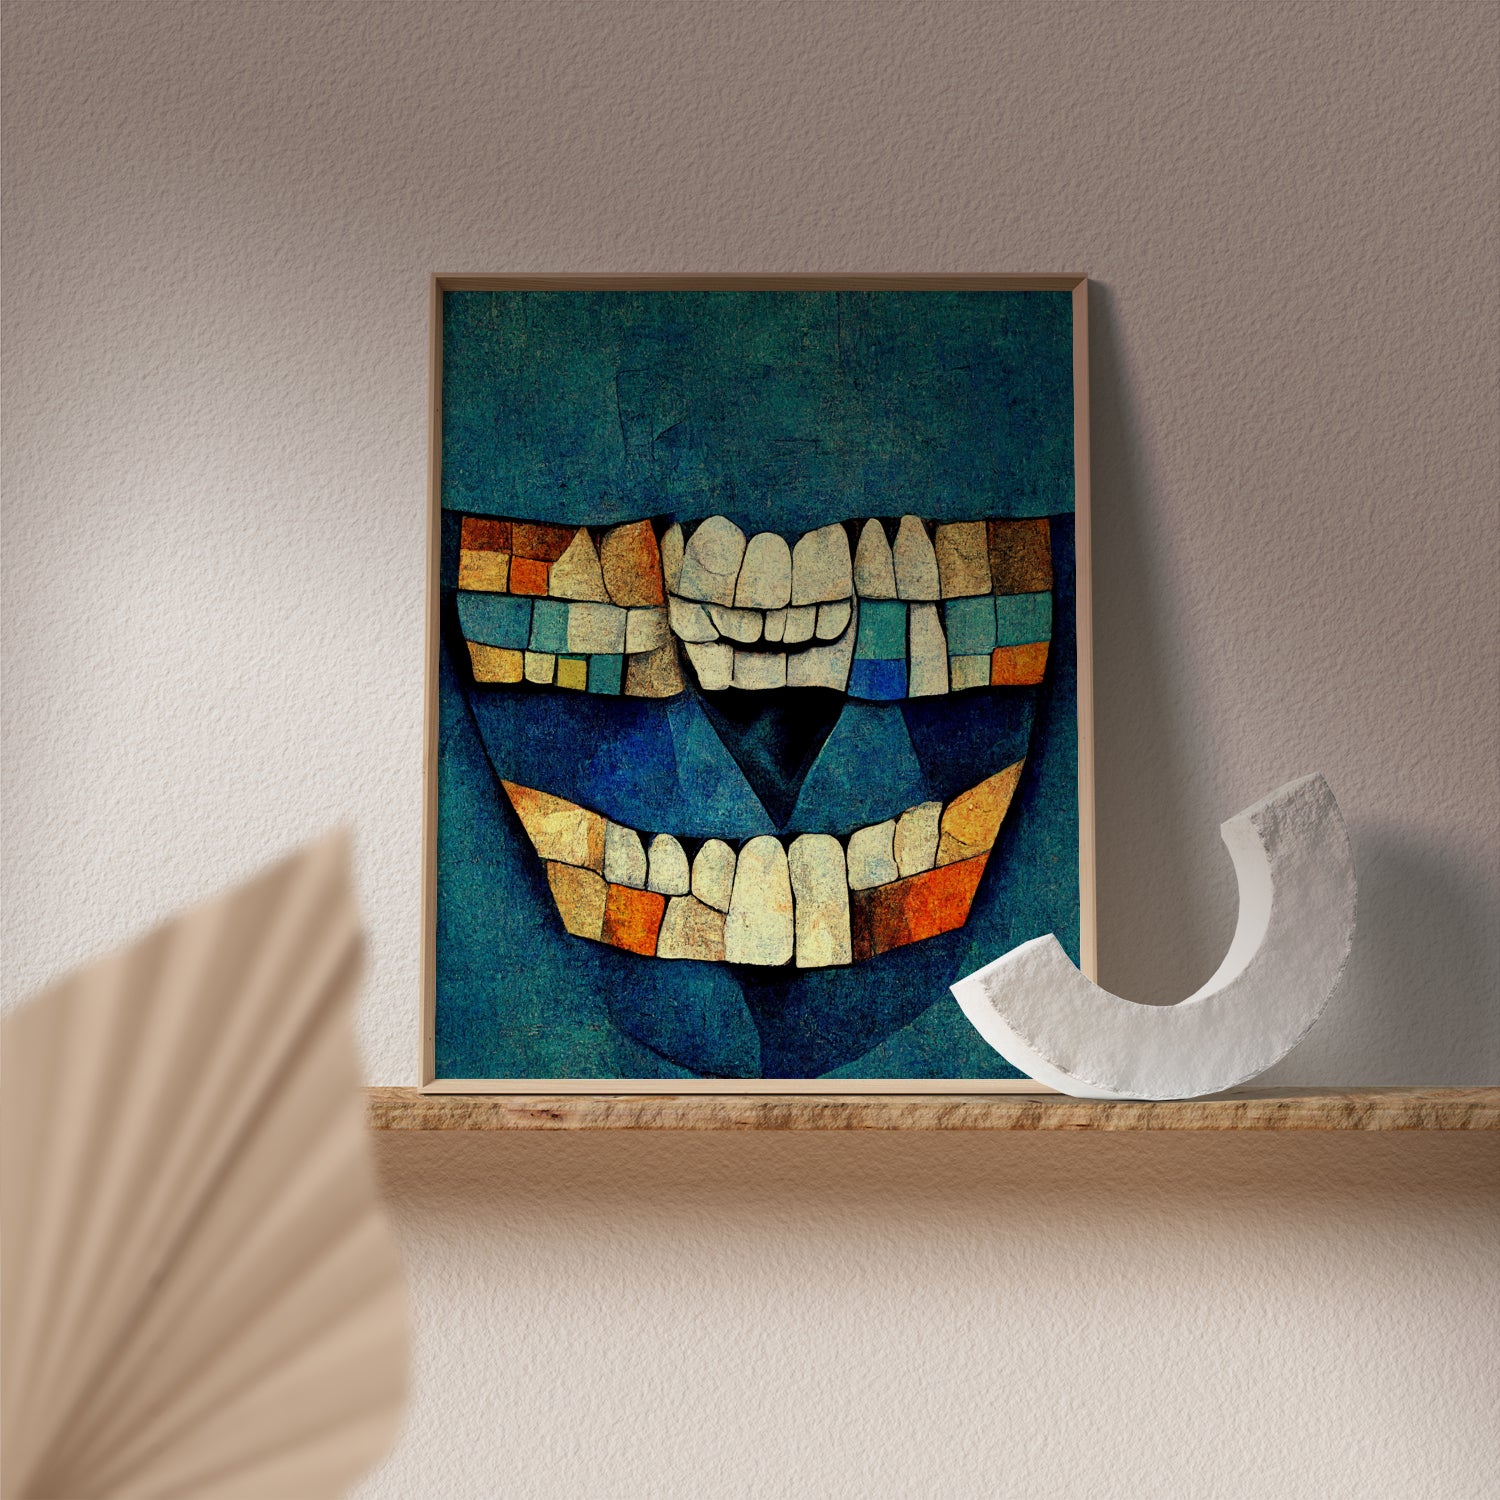 Art print for enhancing dental clinic aesthetics." "Decorative poster for dentist office walls."